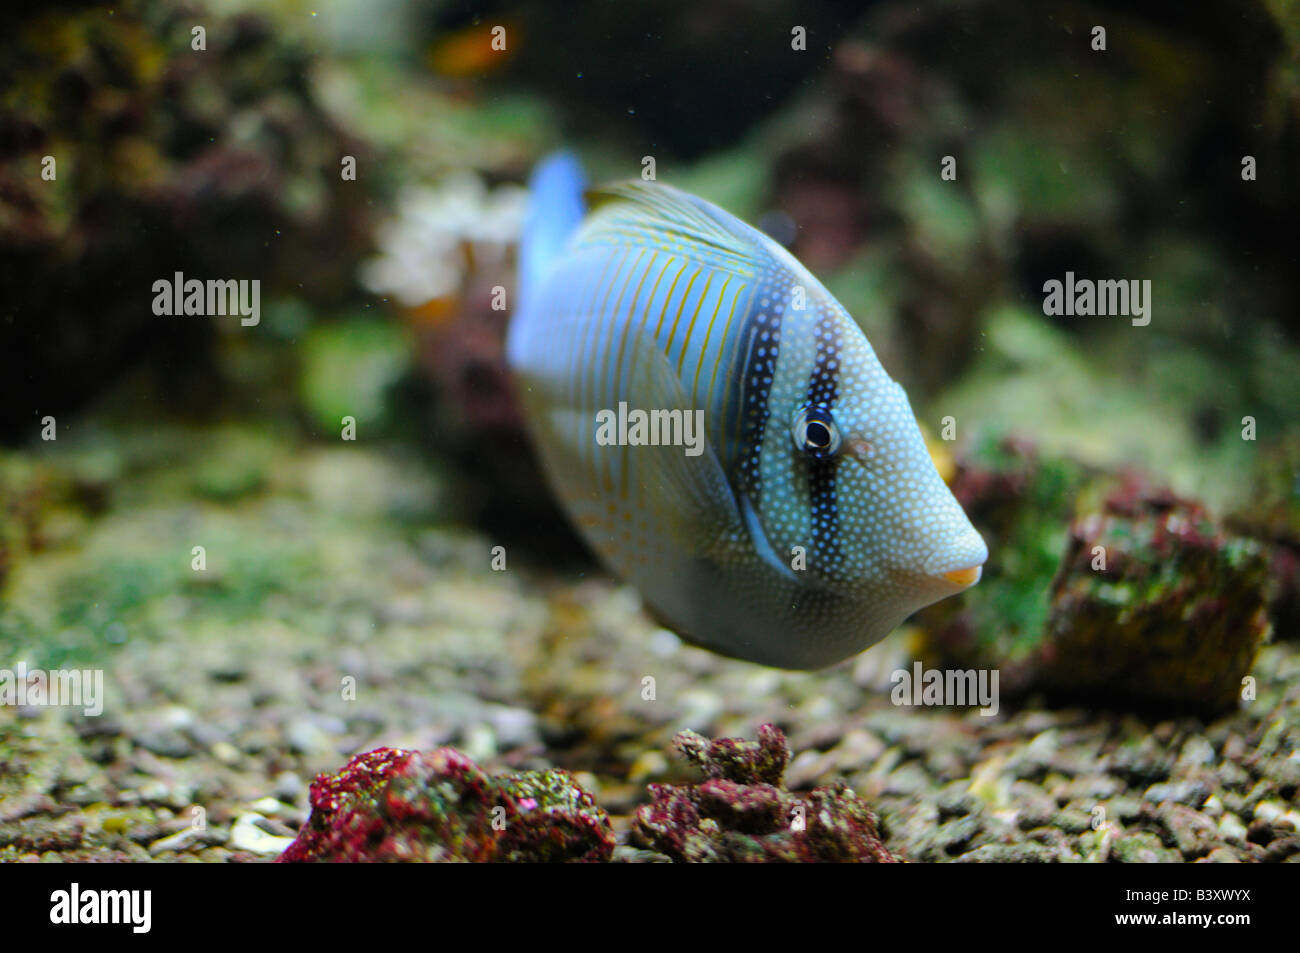 Red Sea sailfin tang Stock Photo: 19645470 - Alamy